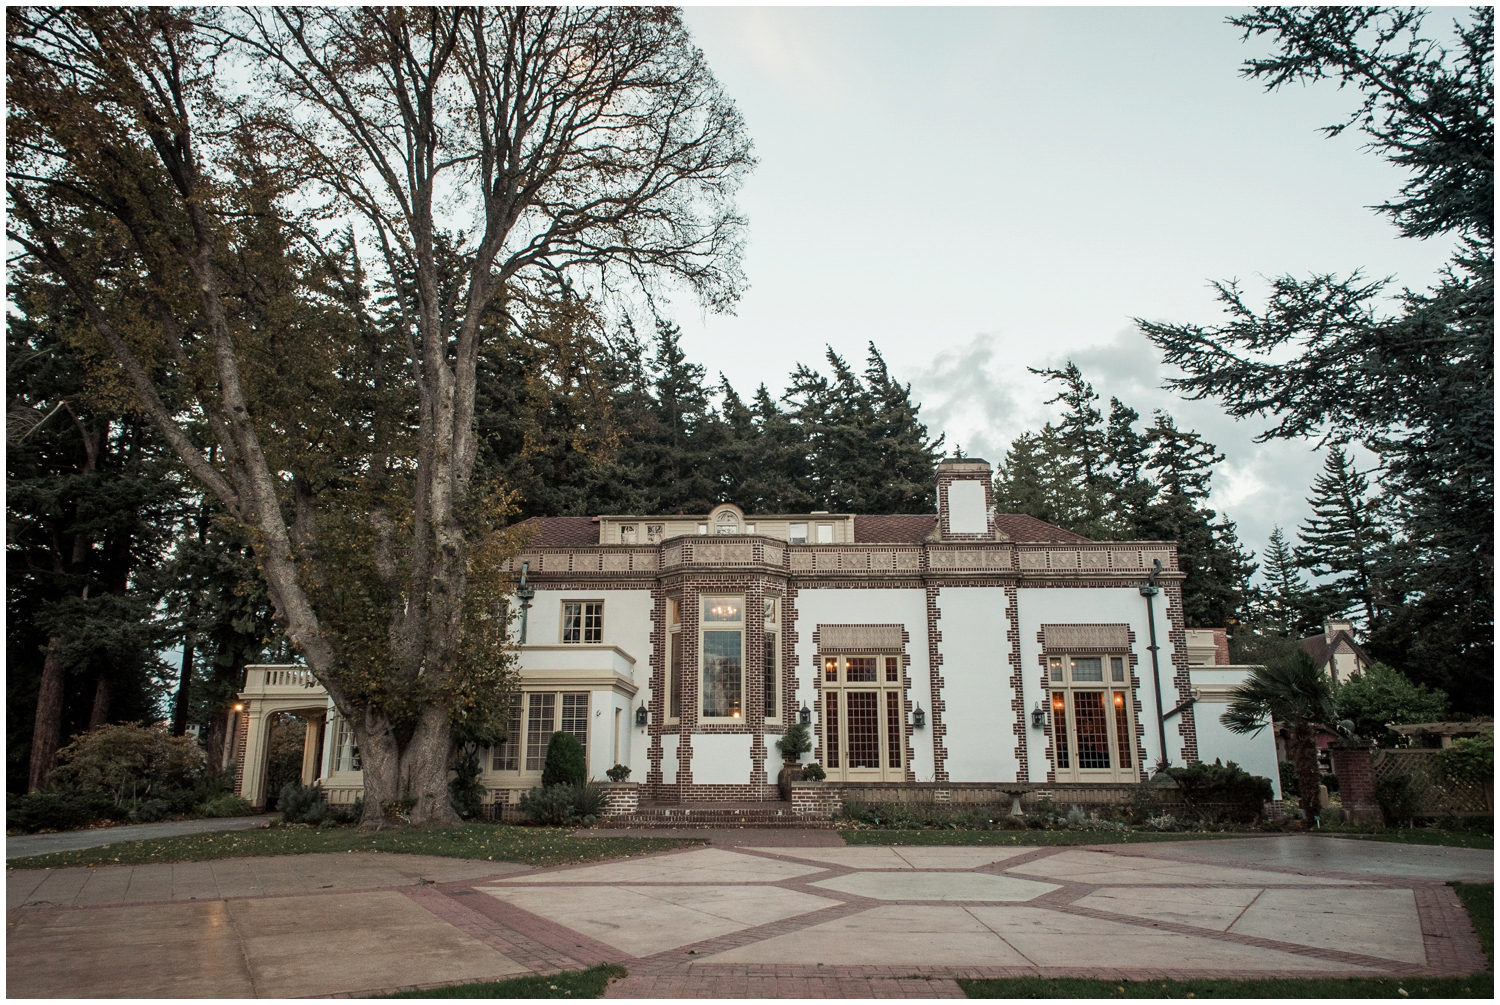 Christmas Morning Proposal at Lairmont Manor| Seattle Wedding Ph